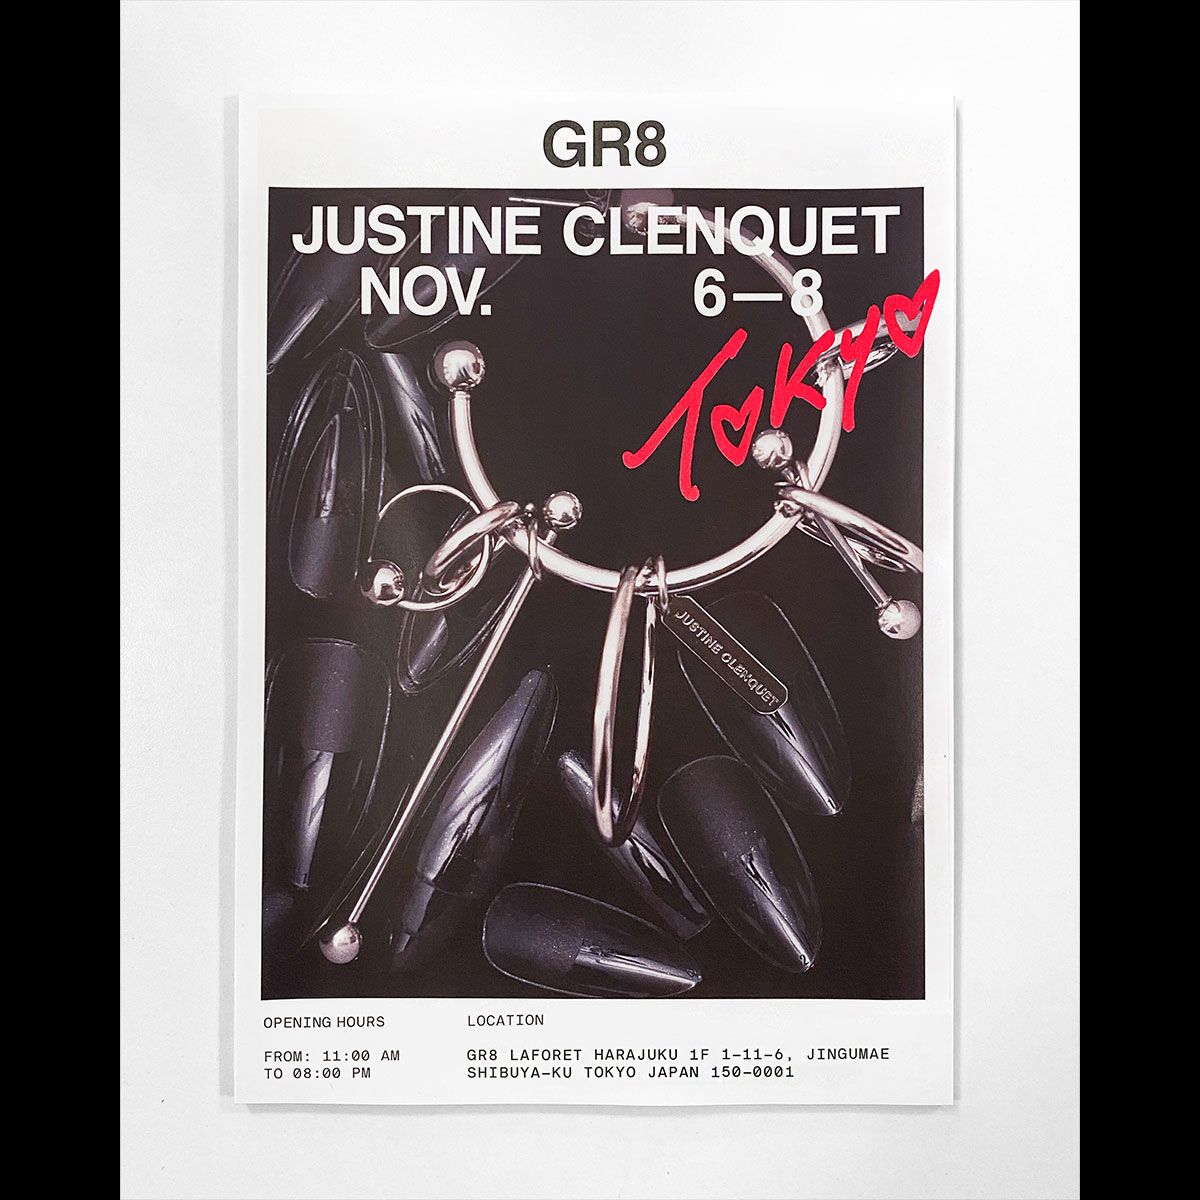 JUSTINE CLENQUETがGR8にてポップアップを開催！日本初のBAGコレクションもリリース